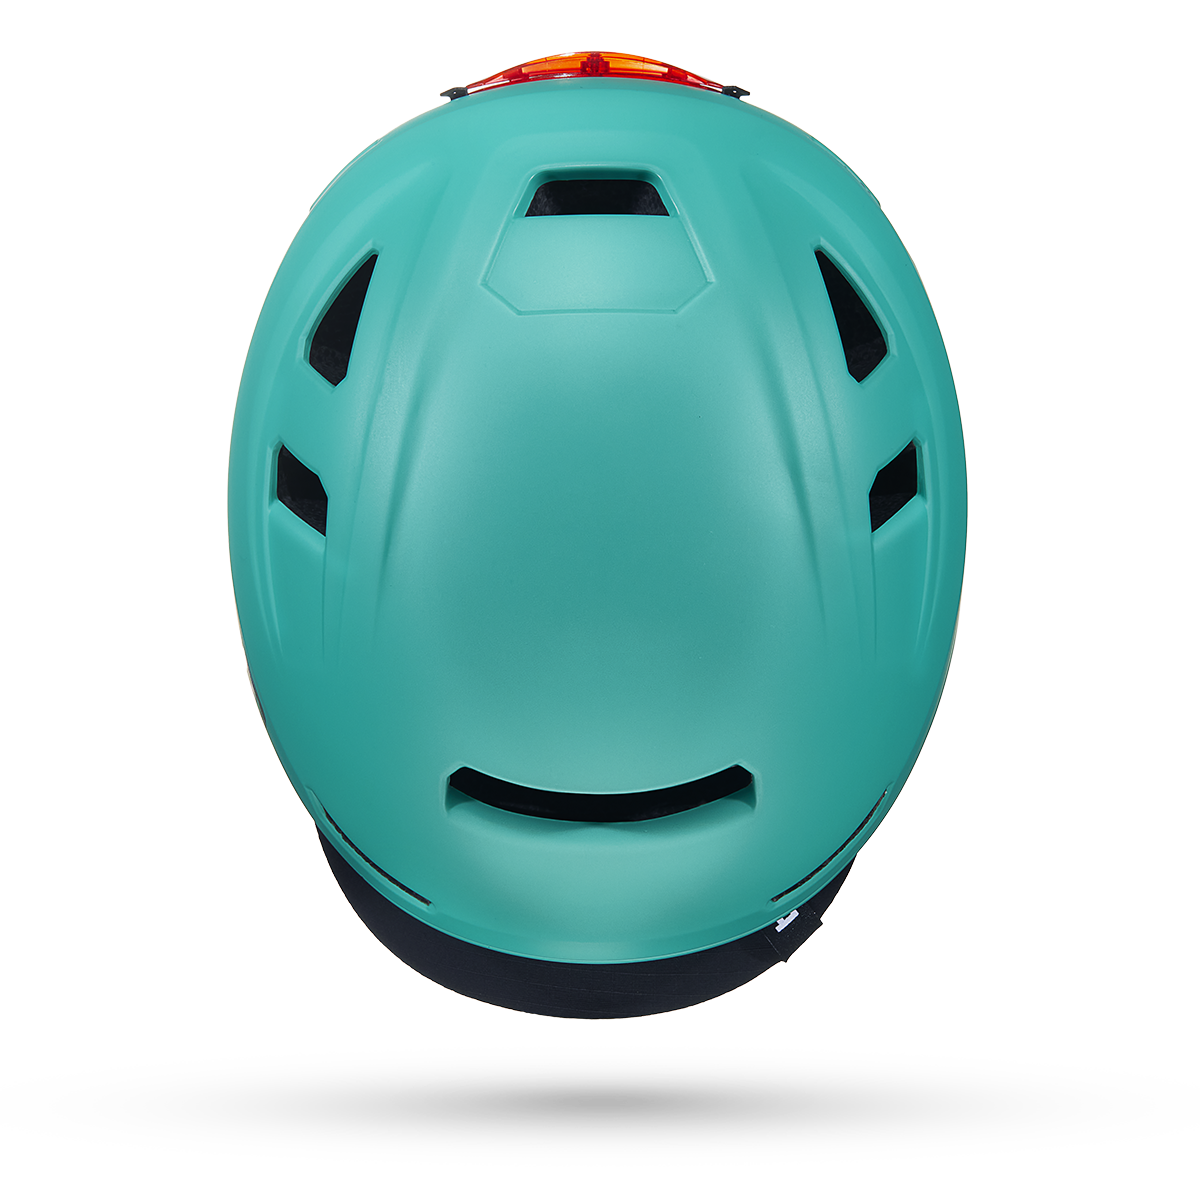 Hudson MIPS Bike Helmet